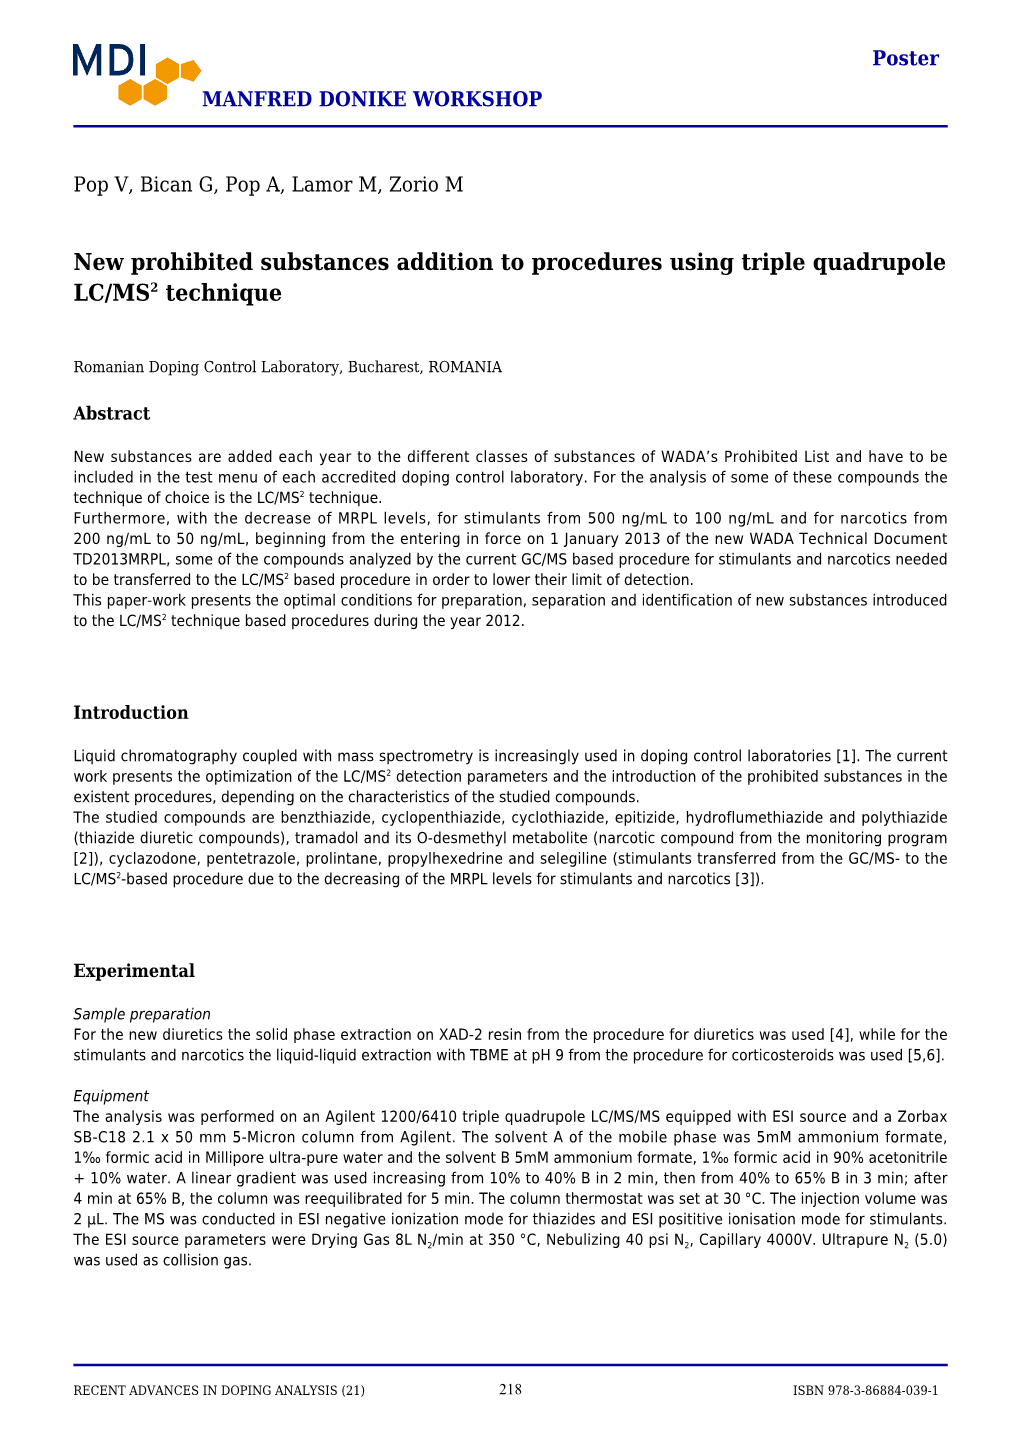 New Prohibited Substances Addition to Procedures Using Triple Quadrupole LC/MS2 Technique